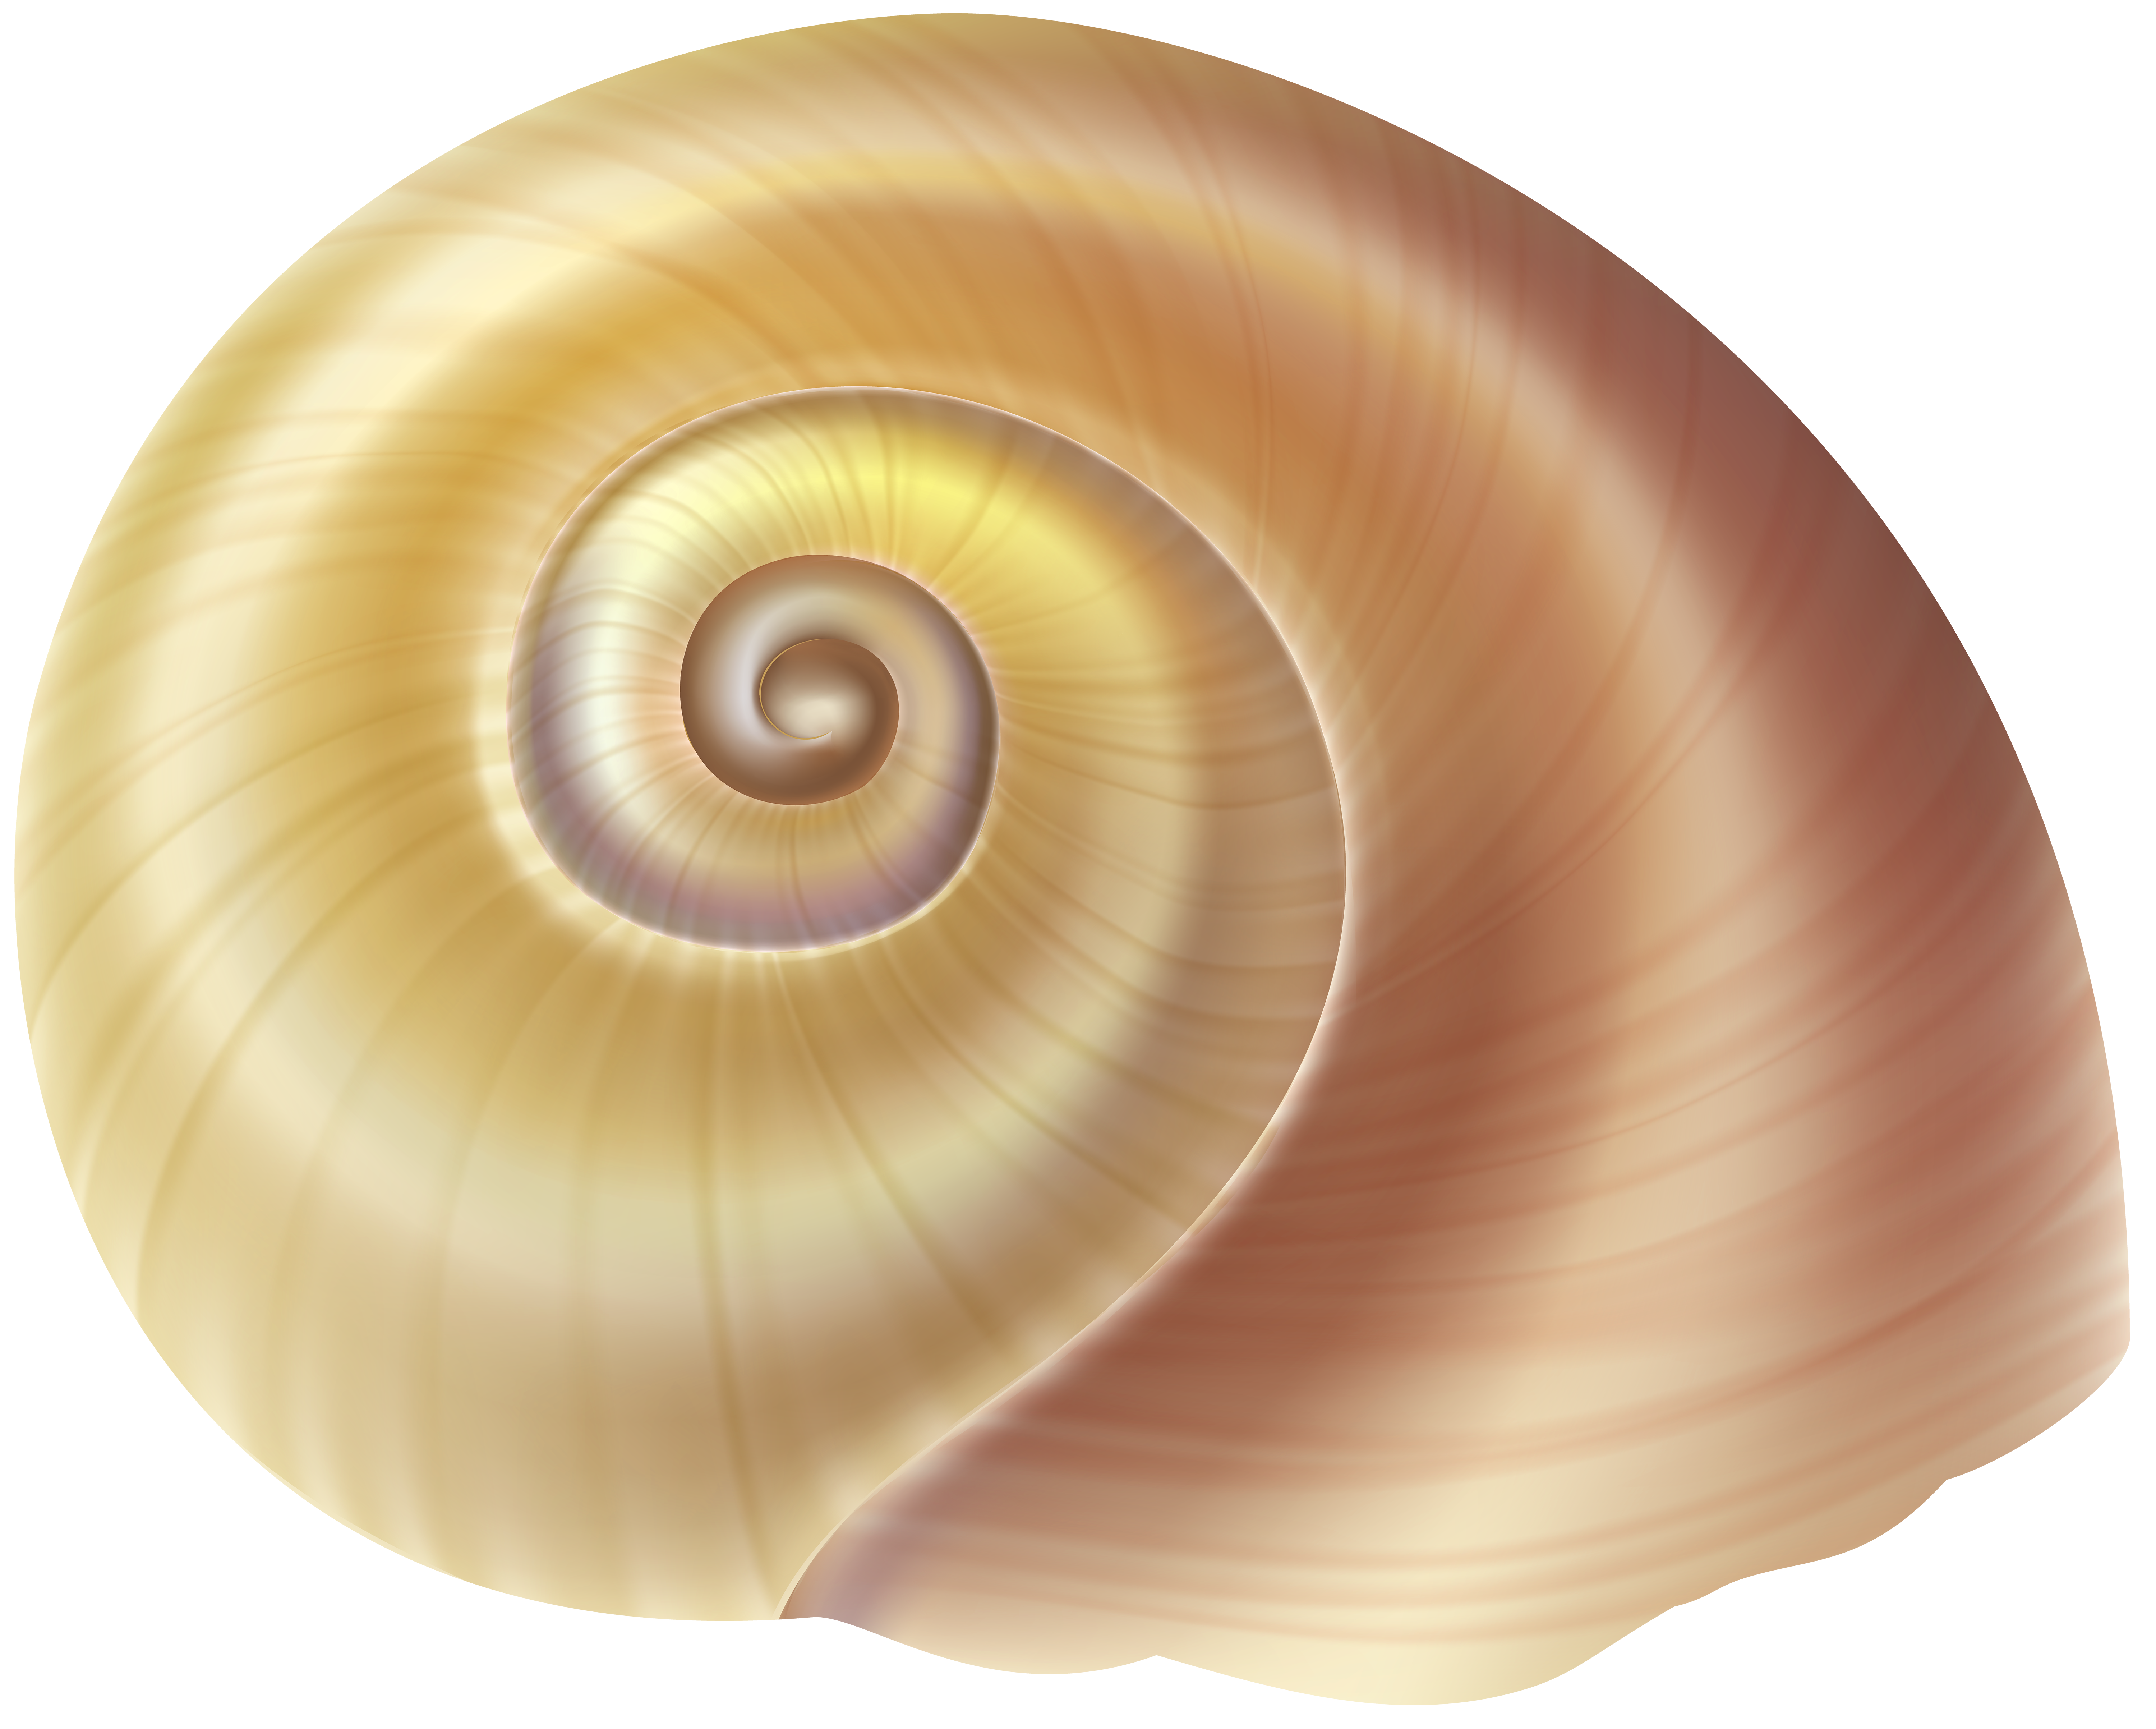 Sea snail shell photo